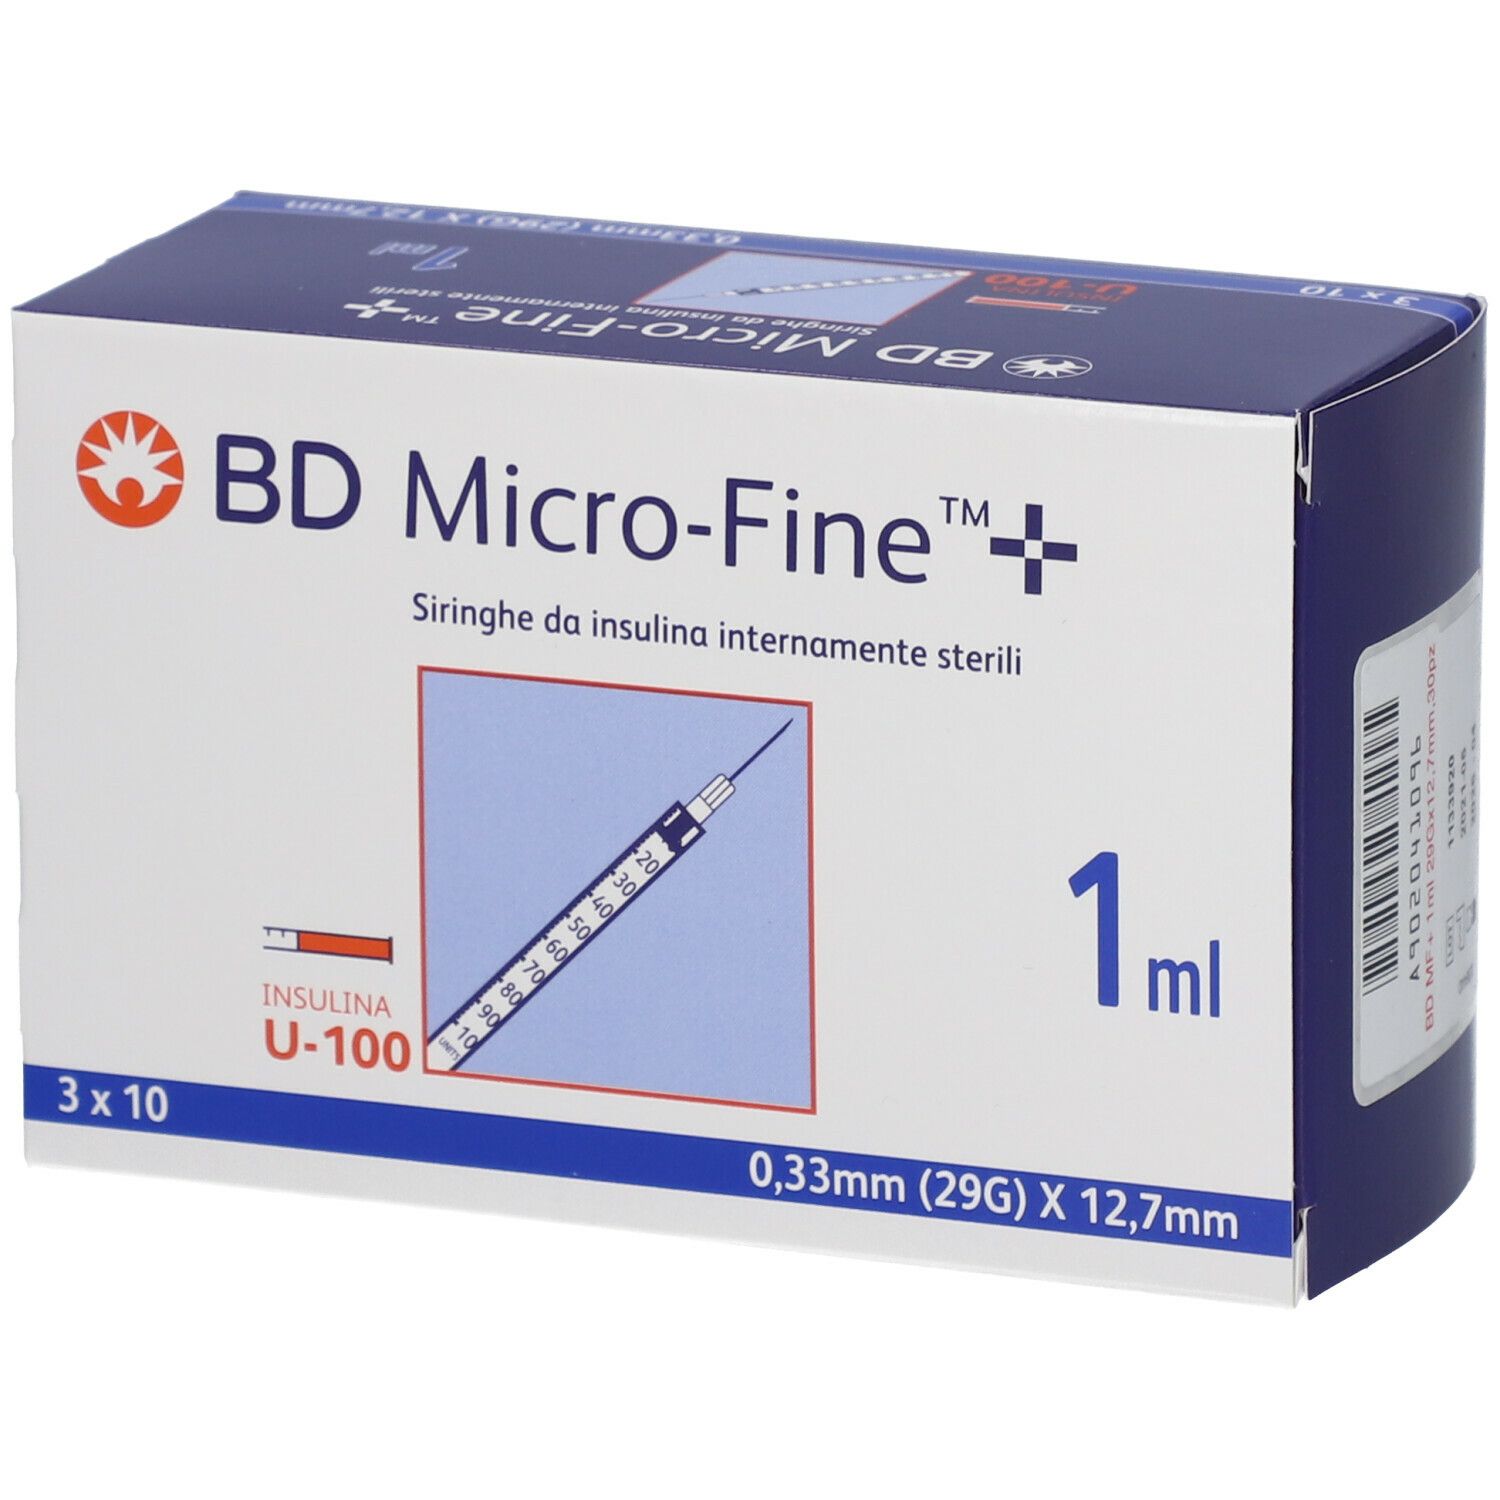 Image of BD Micro-Fine™ + Siringhe da insulina